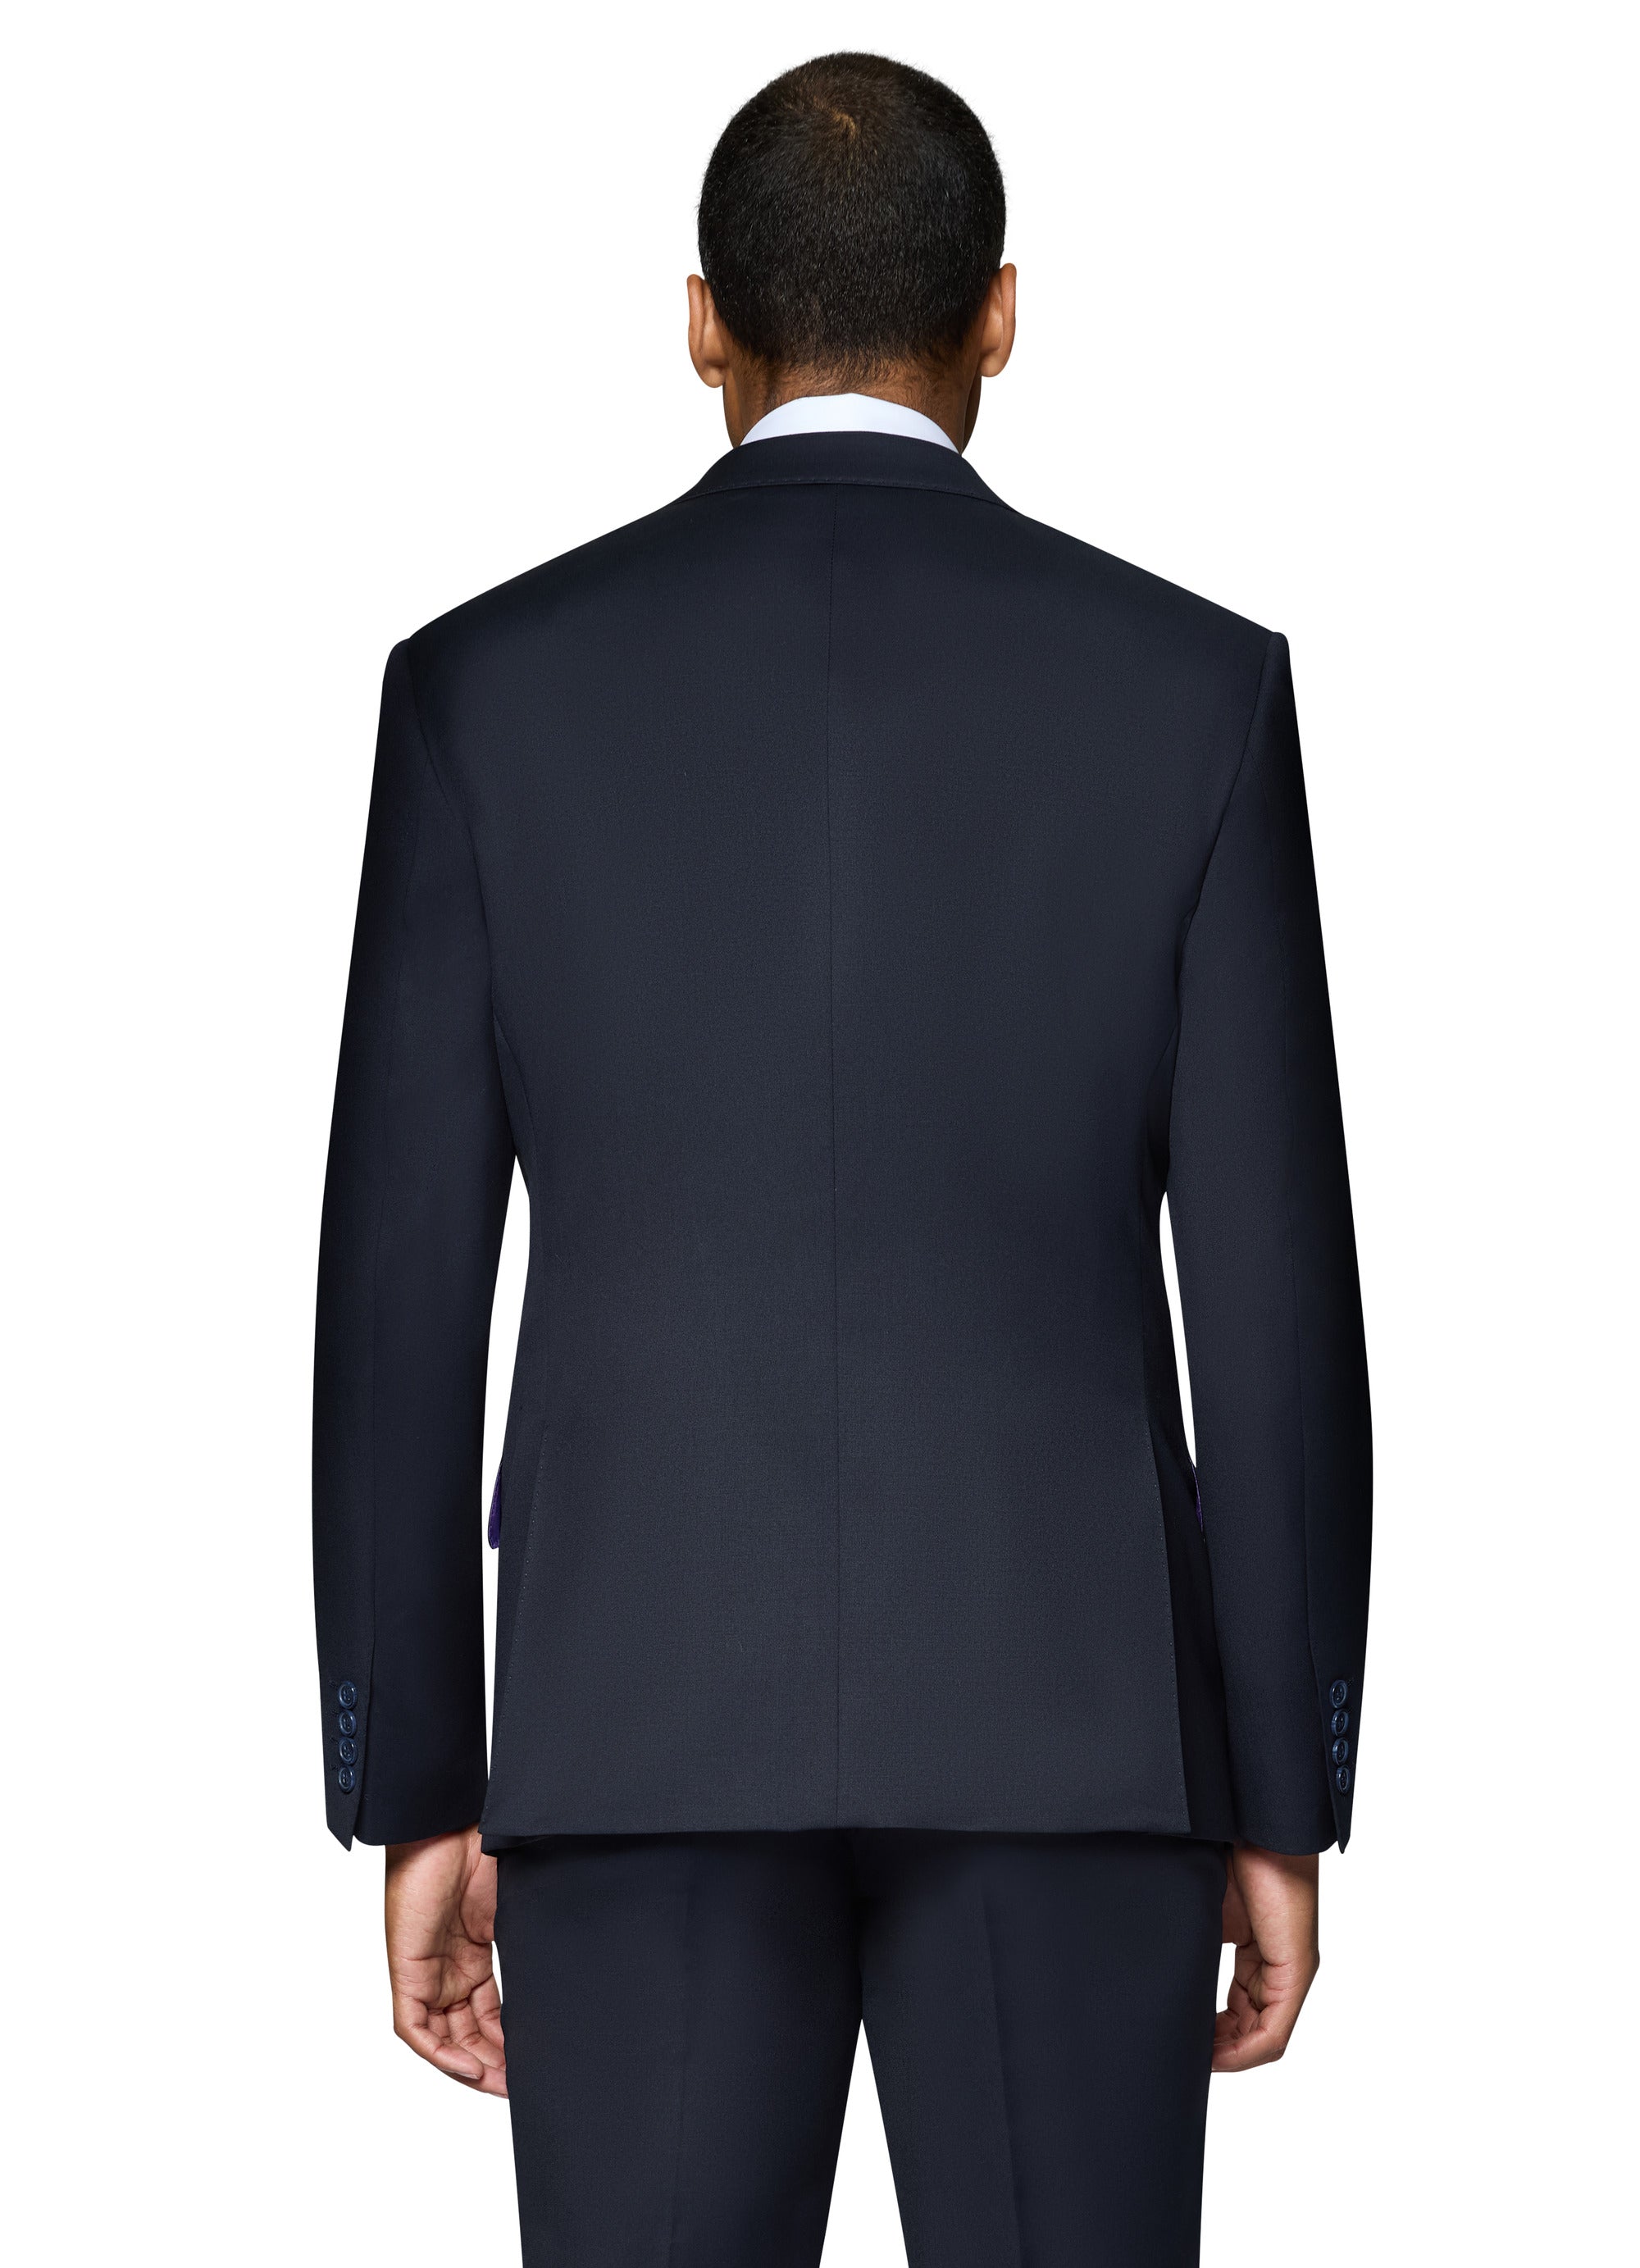 Berragamo - Reda | Modern 2-Piece Notch Solid Navy Suit